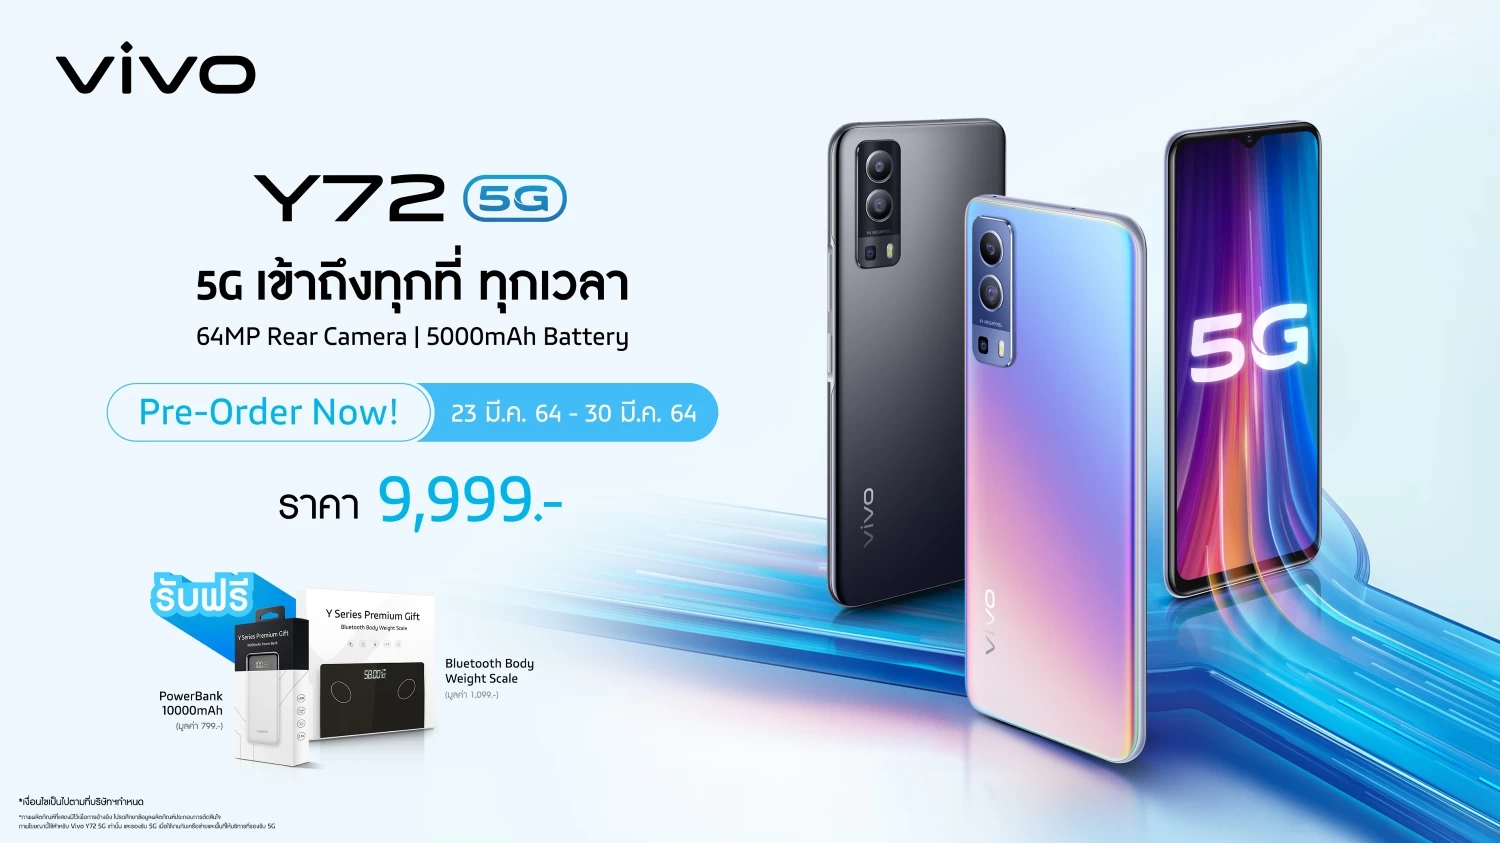 Y72 Pre order TW | Vivo | รวมดีล Vivo Y72 5G จากหลายช่องทาง เป็นเจ้าของสมาร์ตโฟน 5G ราคาเริ่มต้น 2,989 บาท